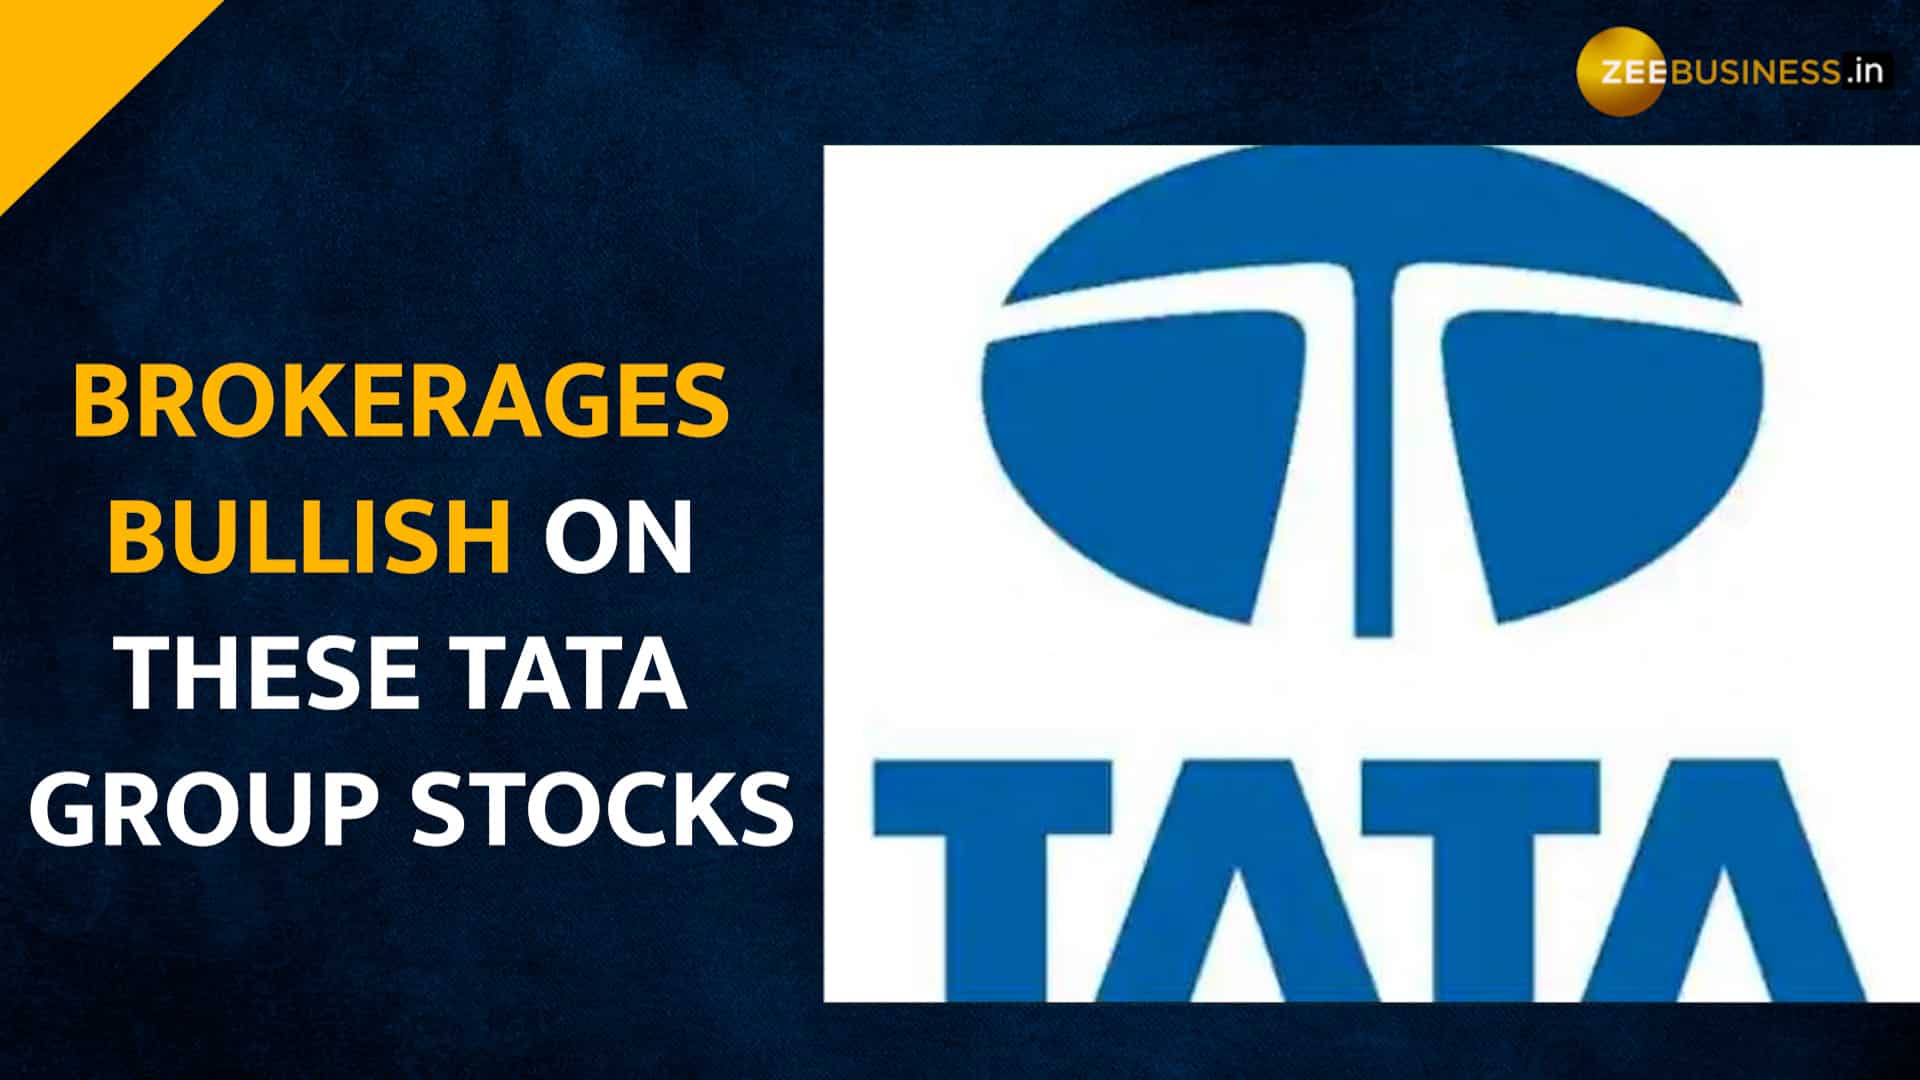 Tata car logo editorial stock photo. Image of transportation - 77002613